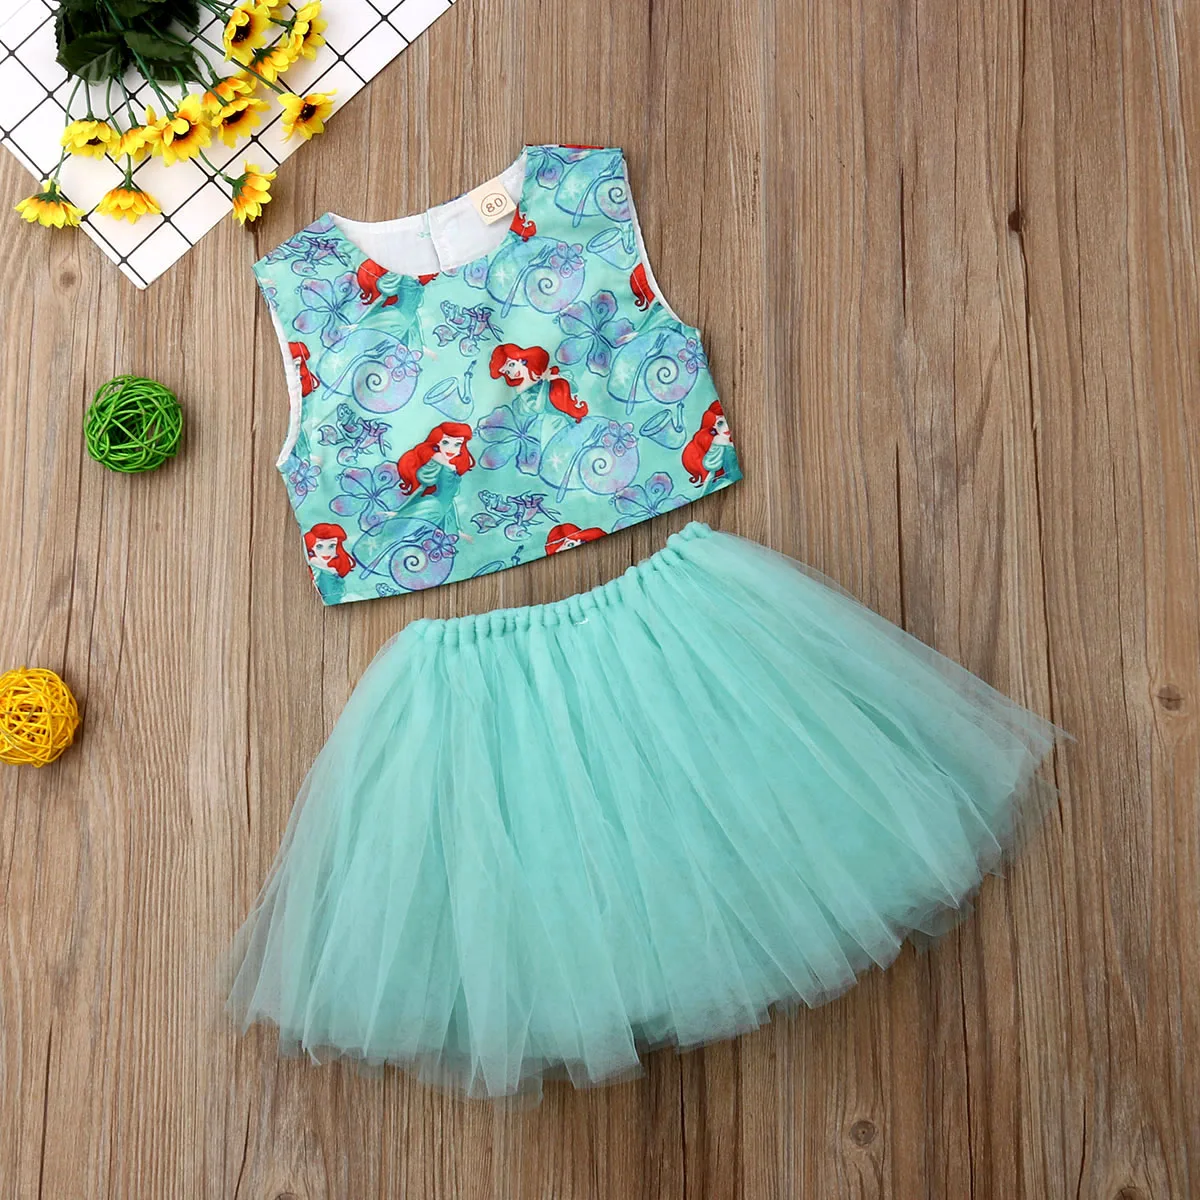 Toddler Infant Kids Baby Girl Mermaid Vest Tops Mesh Ball Gown Dress Outfits Summer Sunsuit | Детская одежда и обувь